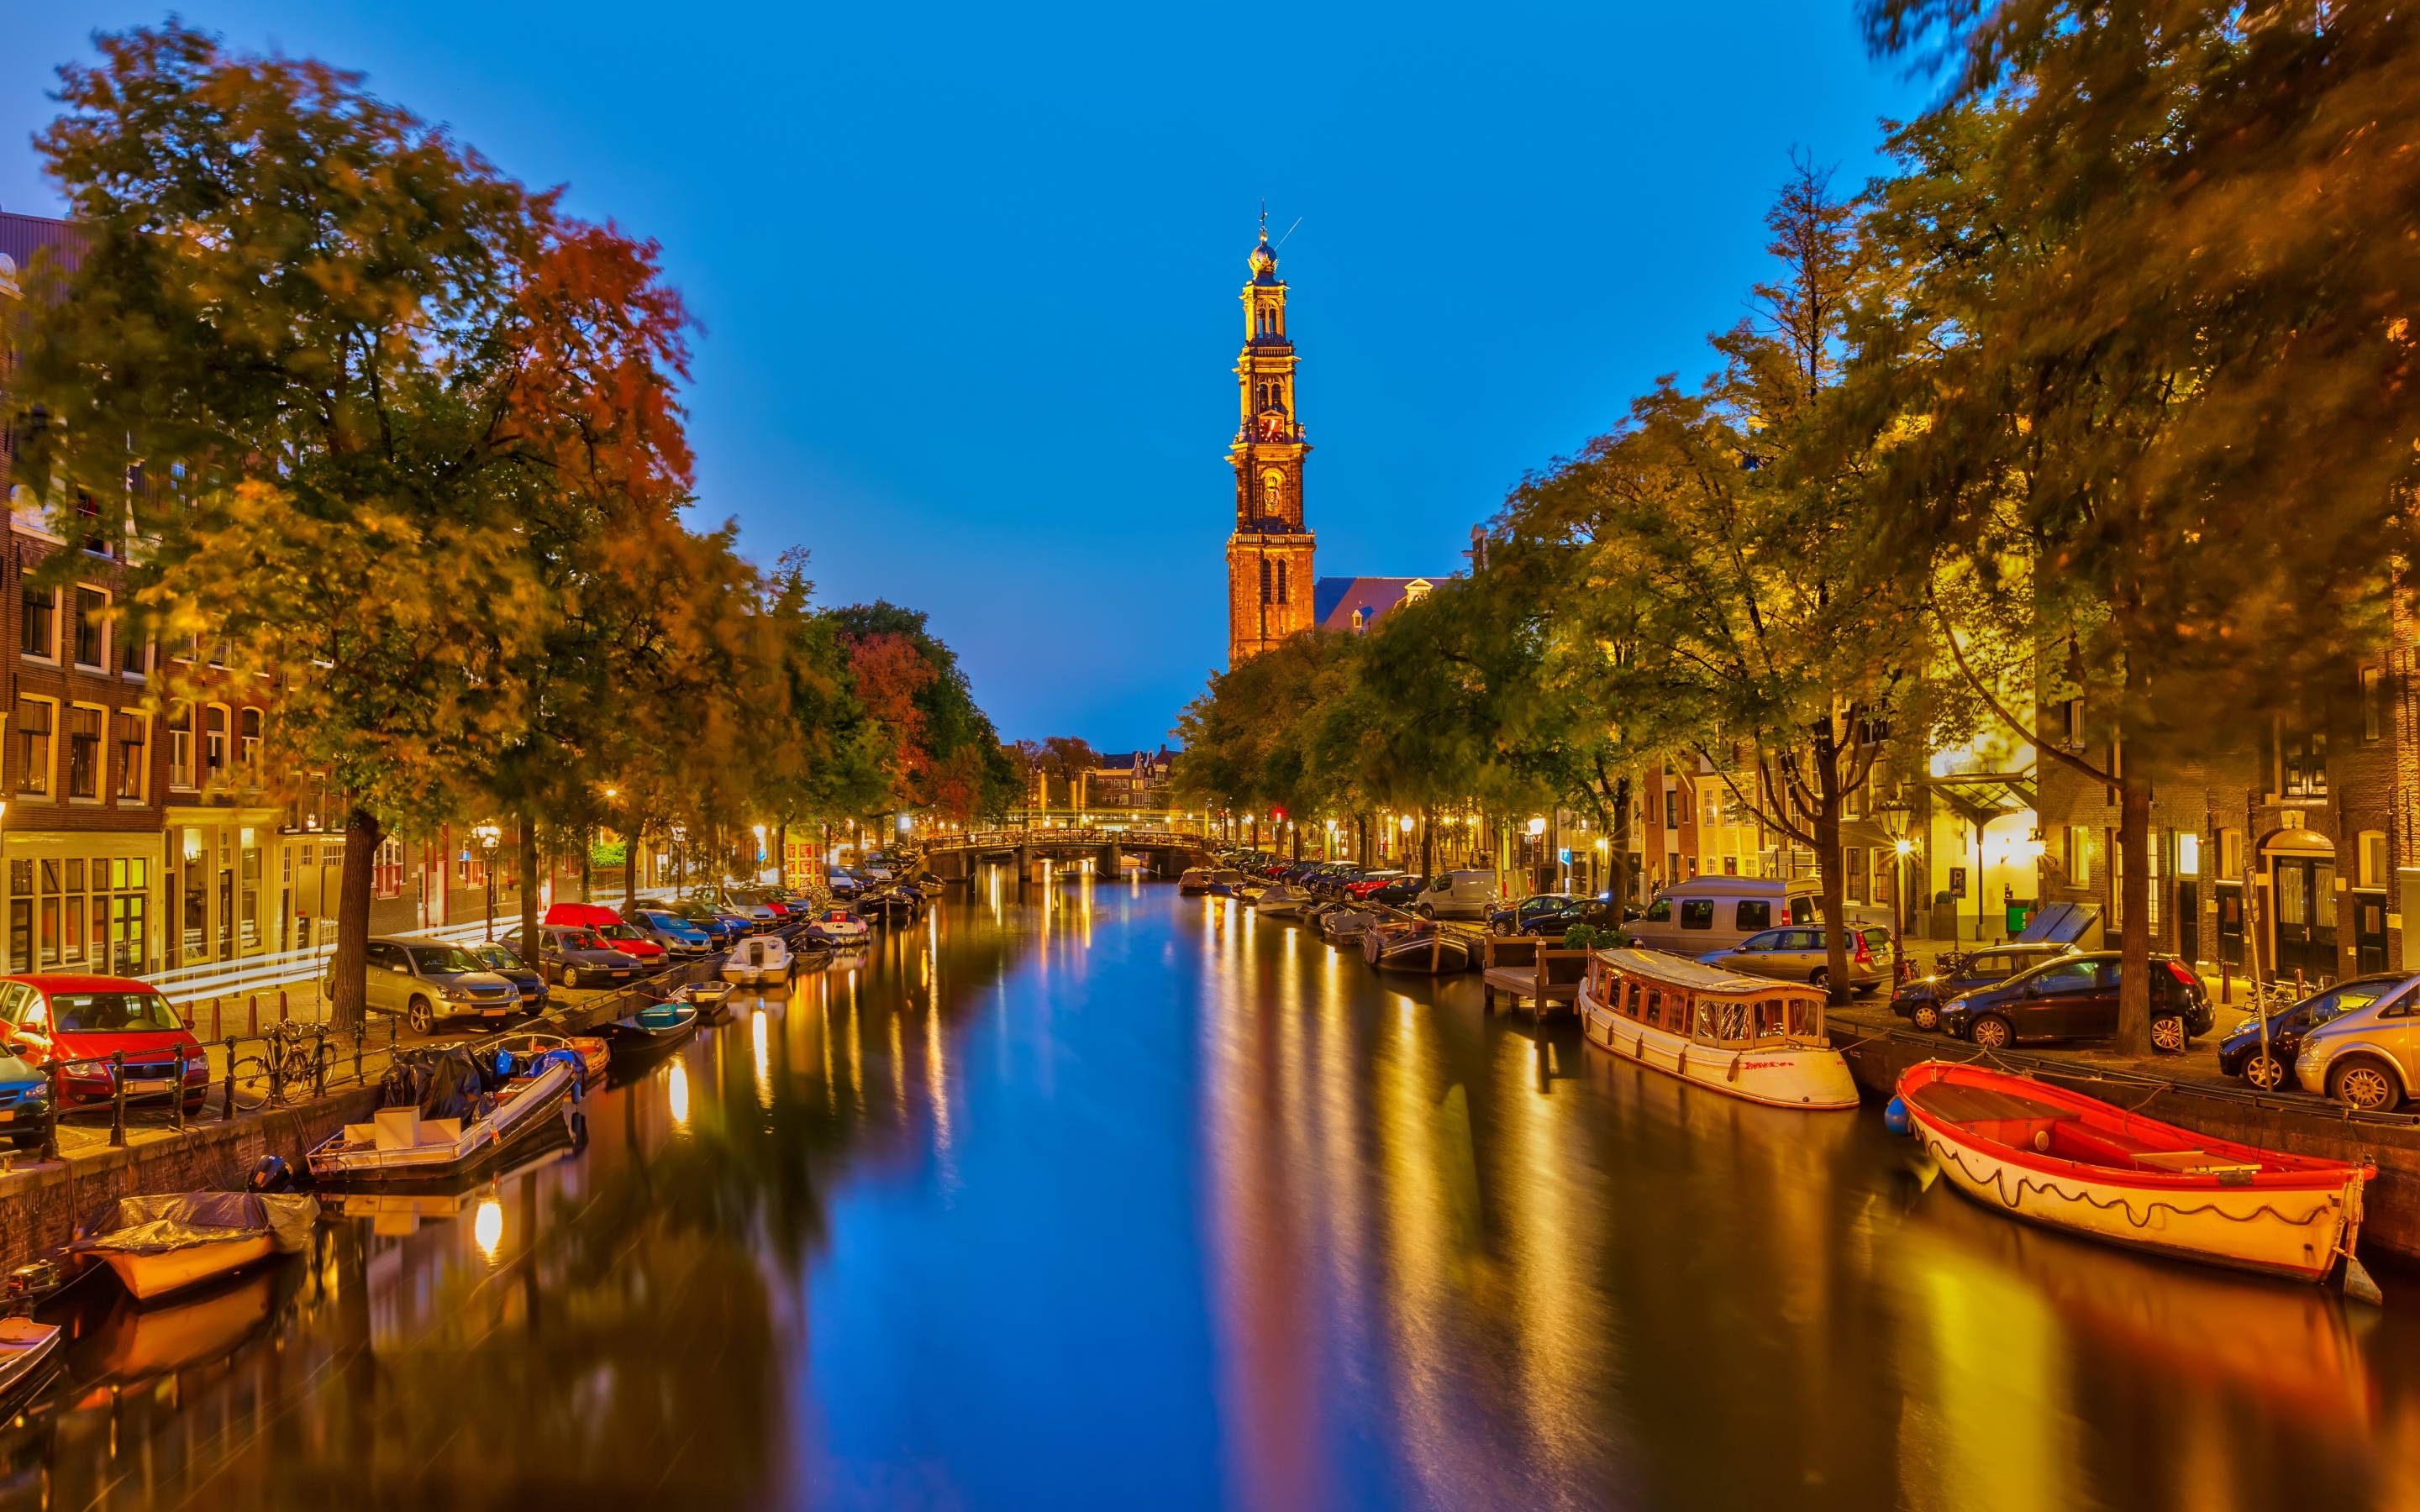 Amsterdam Netherlands for 2880 x 1800 Retina Display resolution